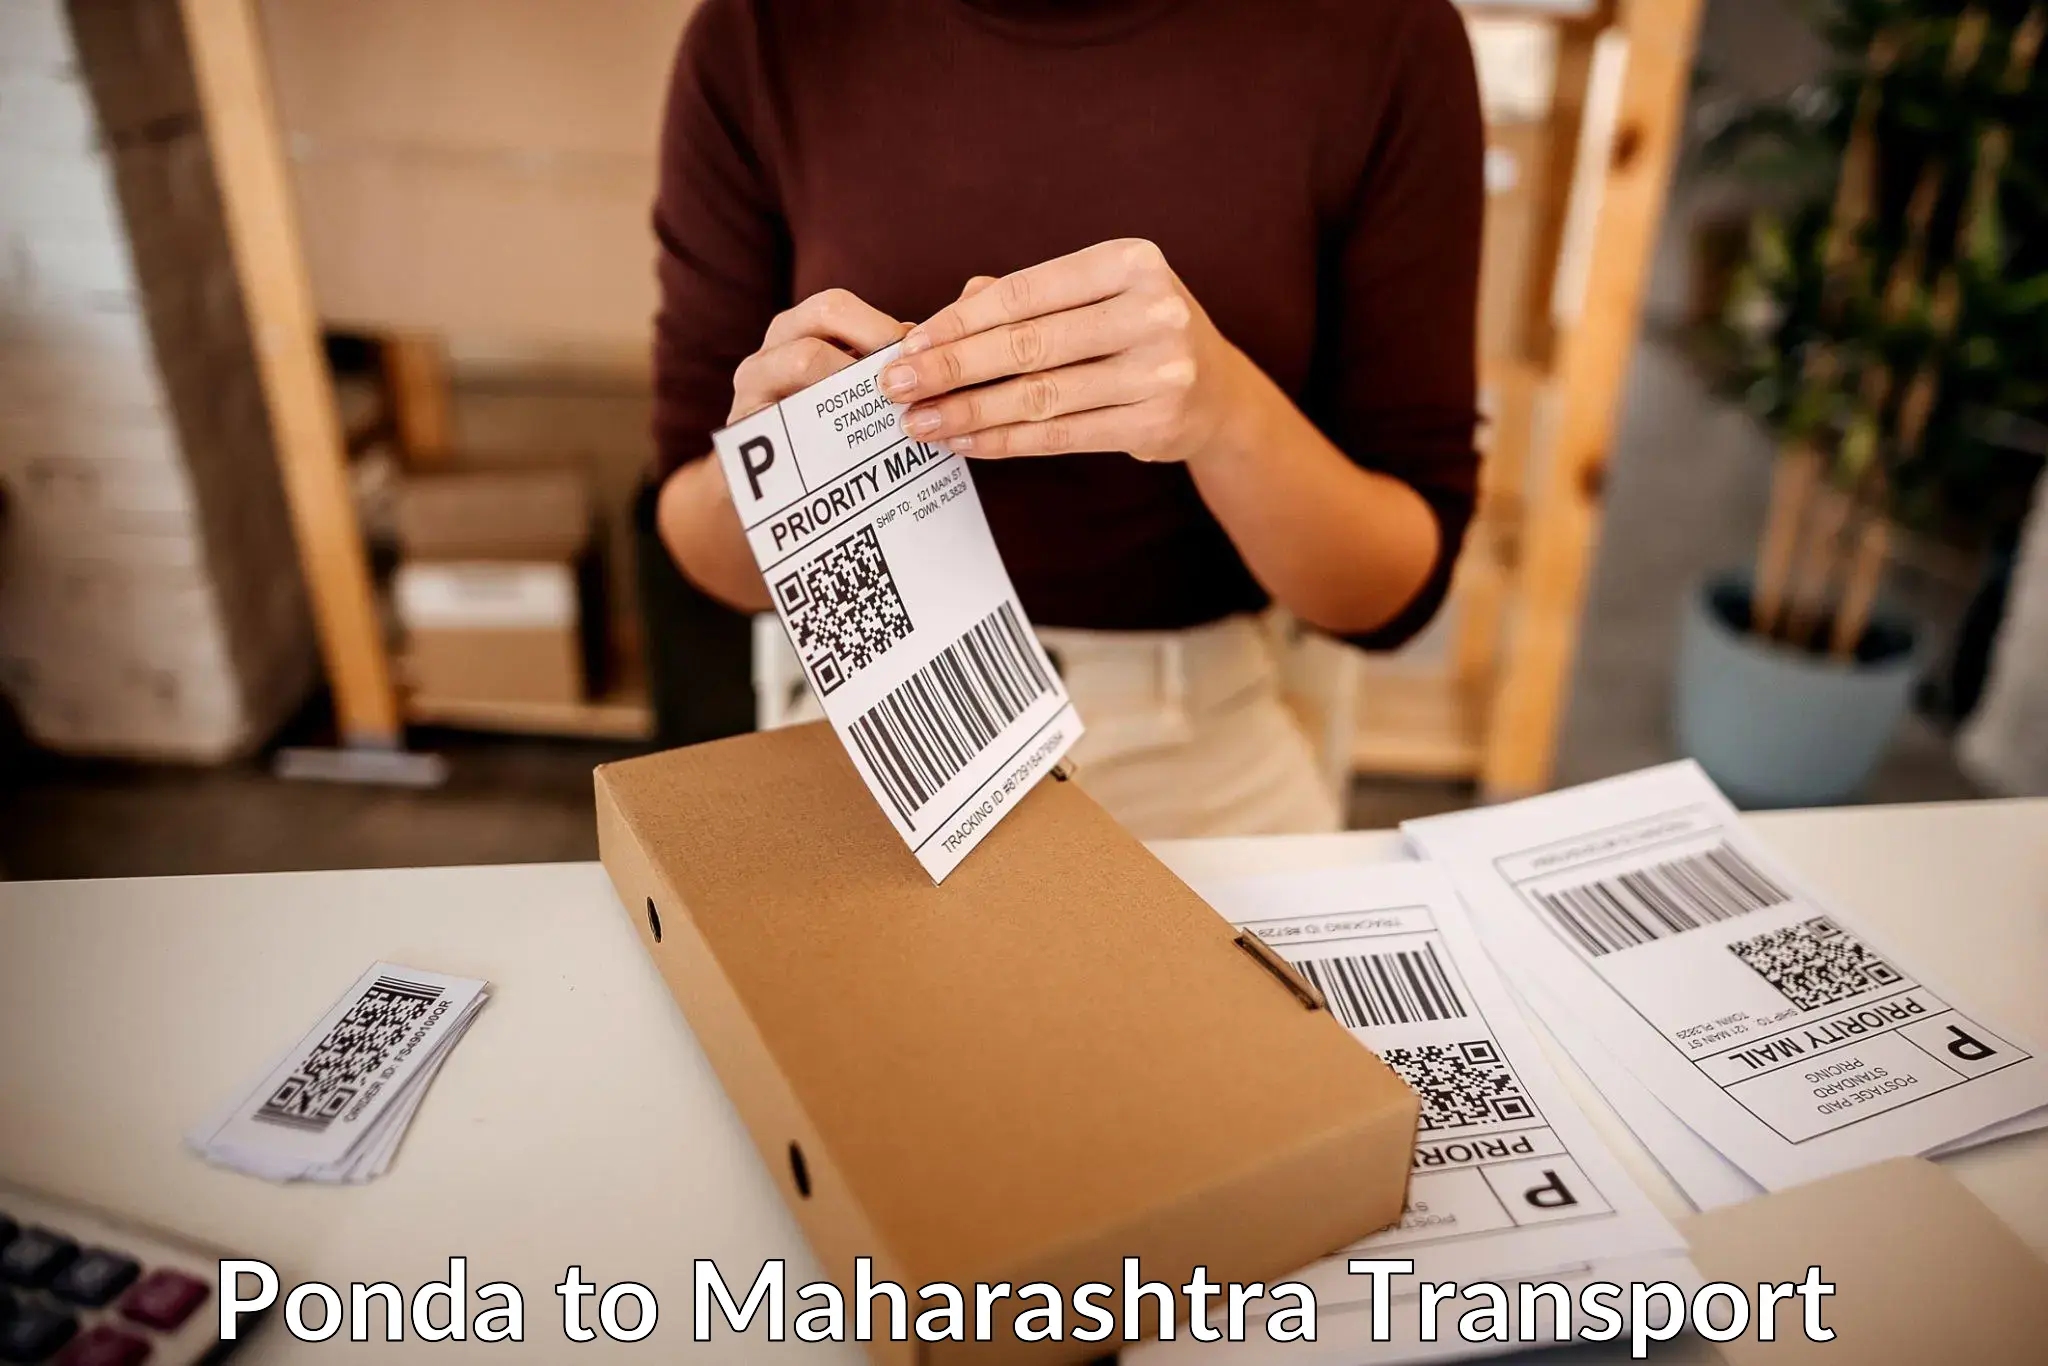 Online transport service Ponda to Mumbai